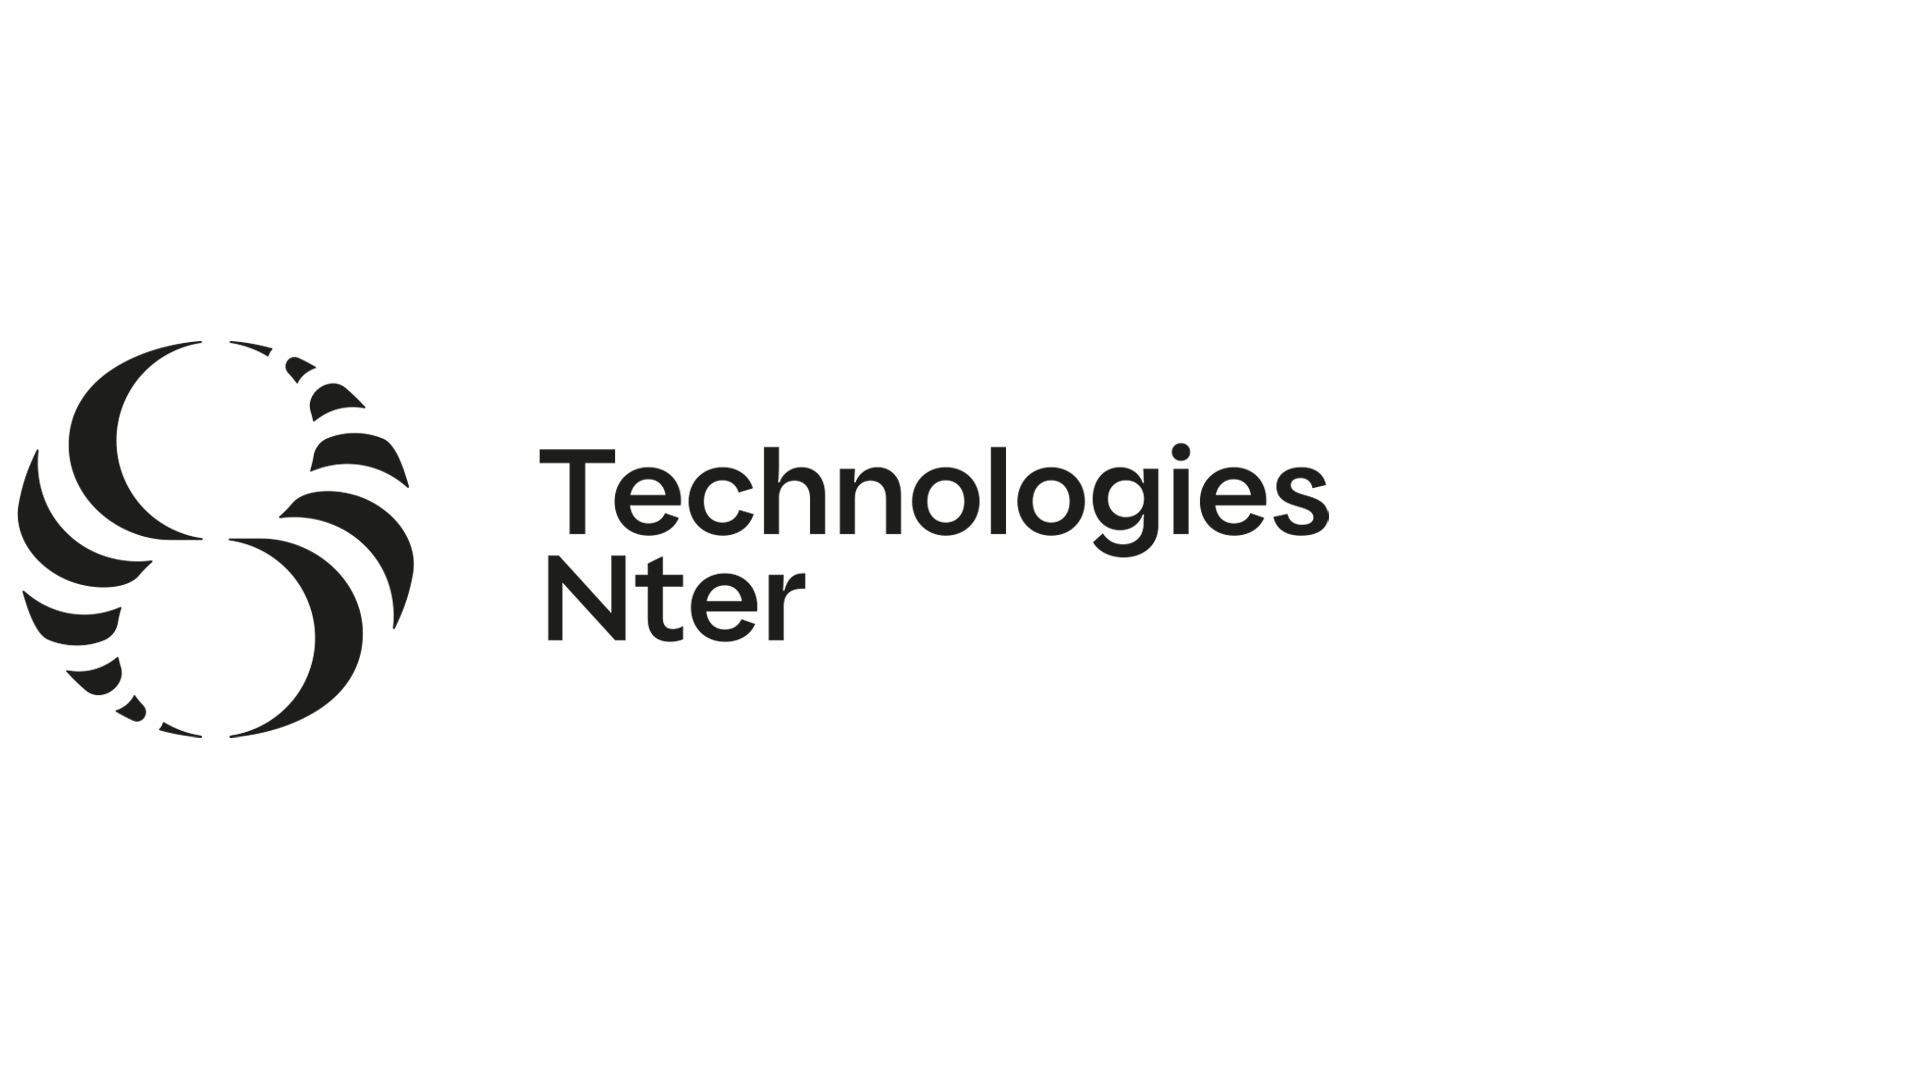 Technologies Nter